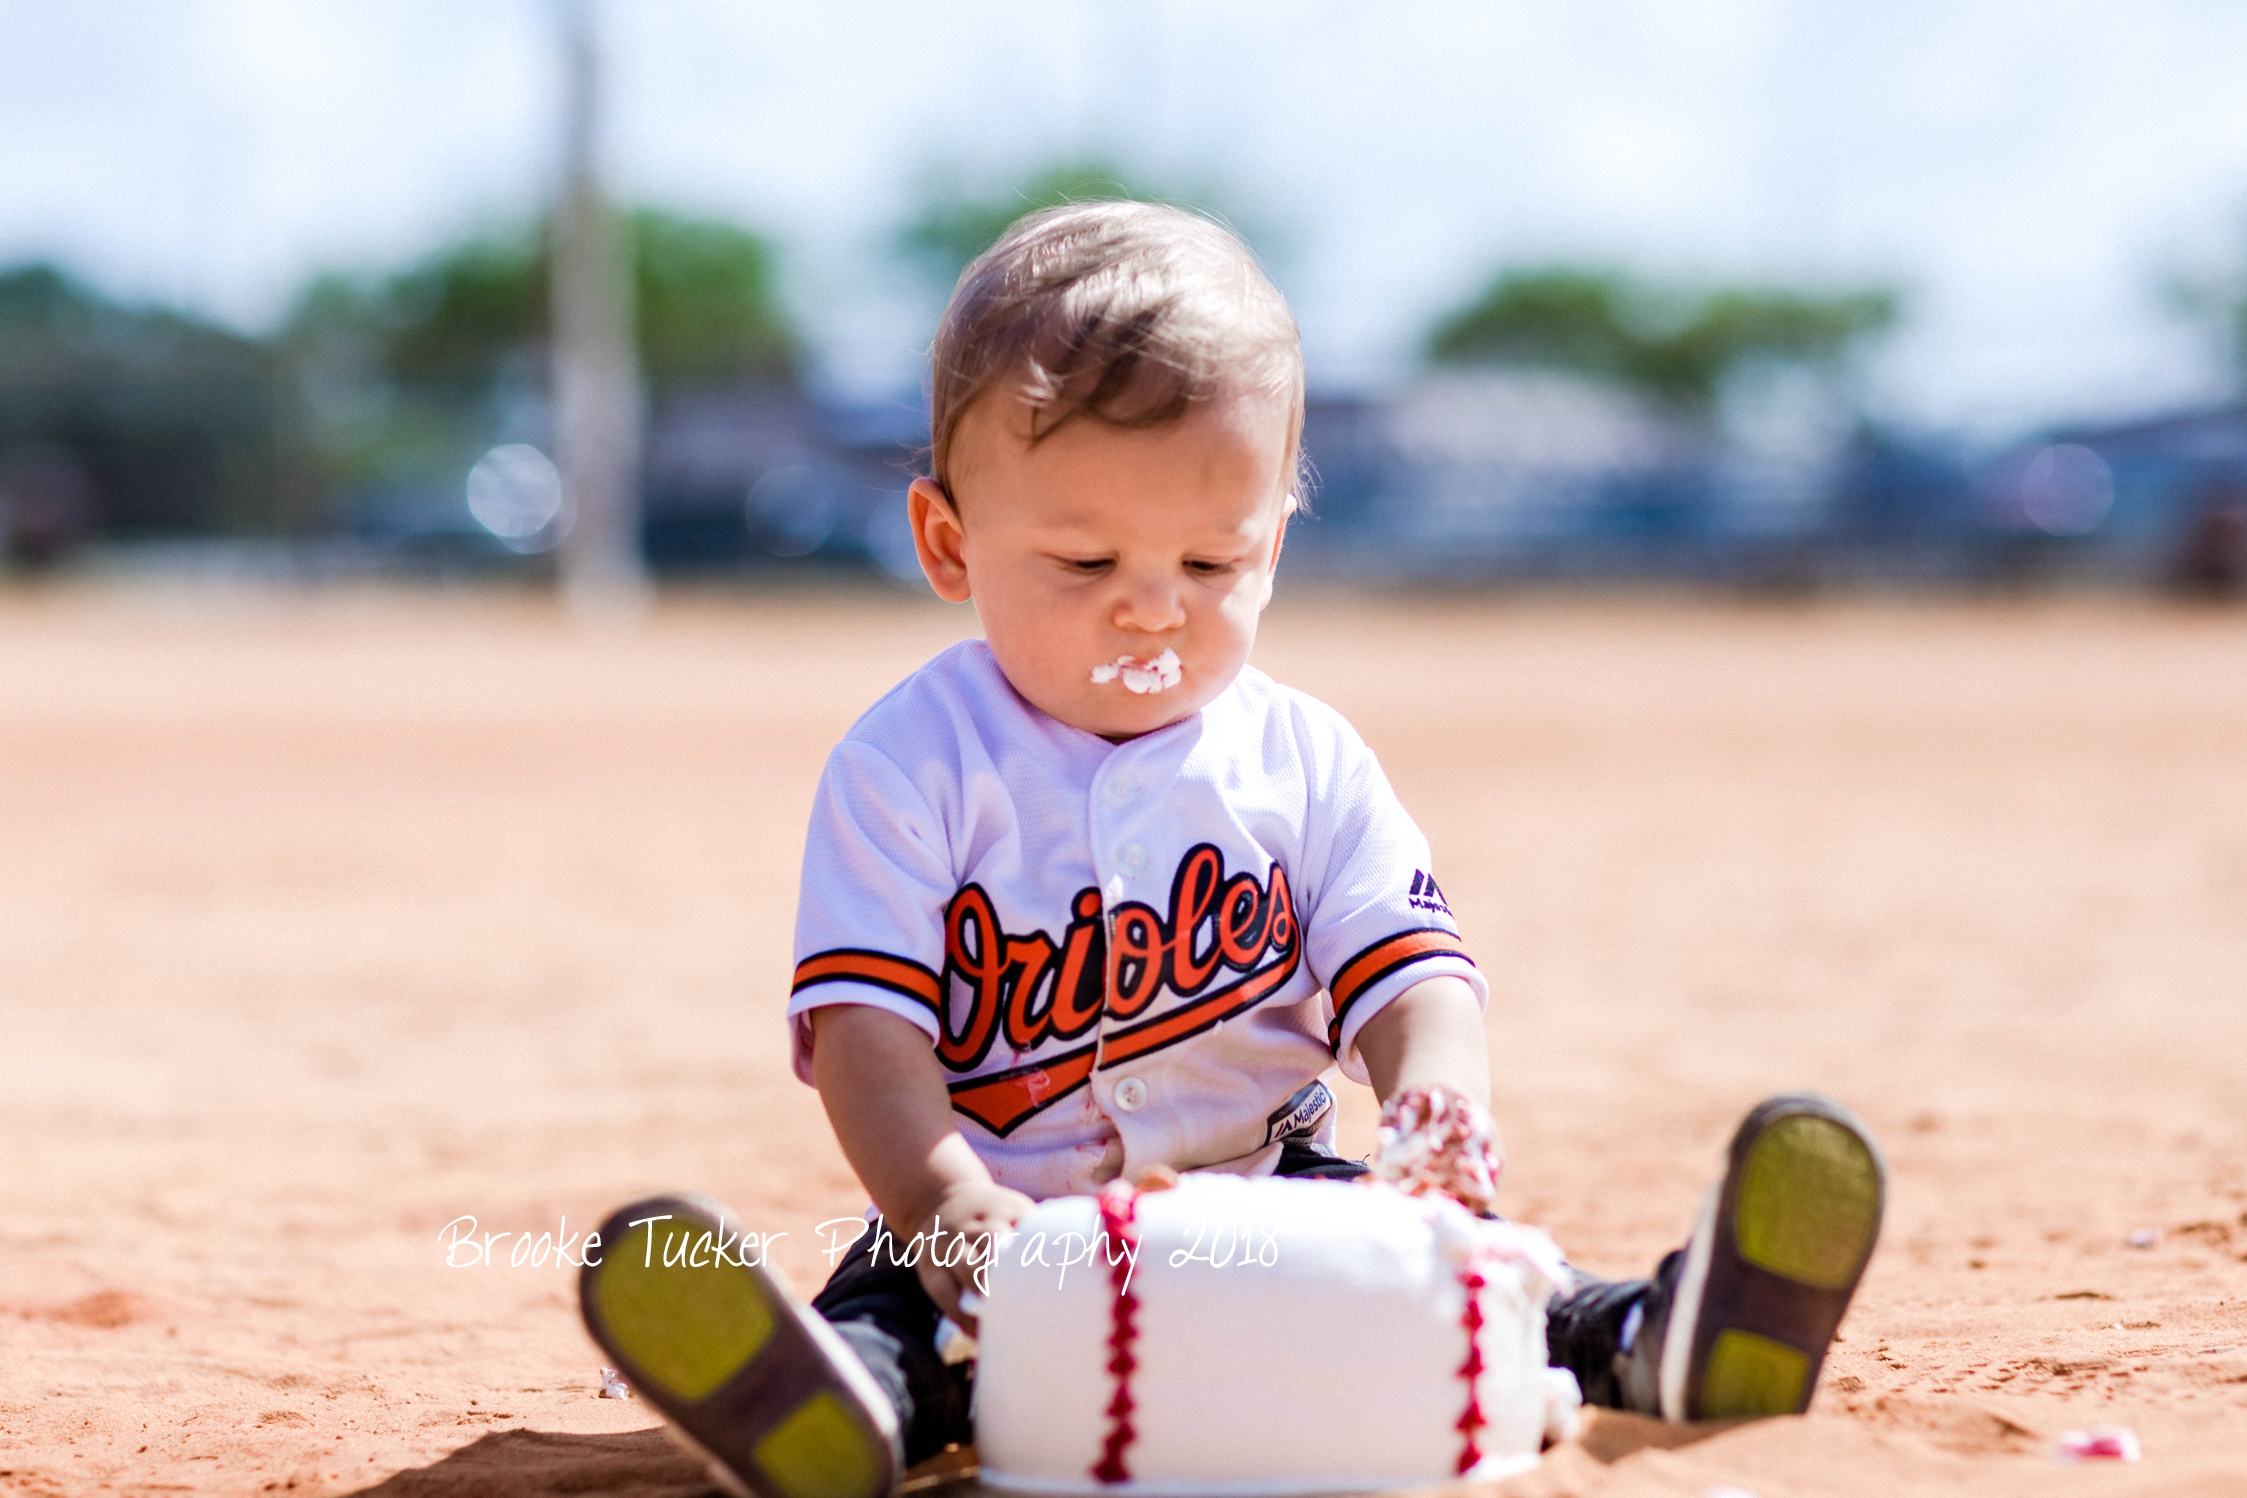 Orioles themed cake smash, brooke tucker photography, orlando florida child and family photographer